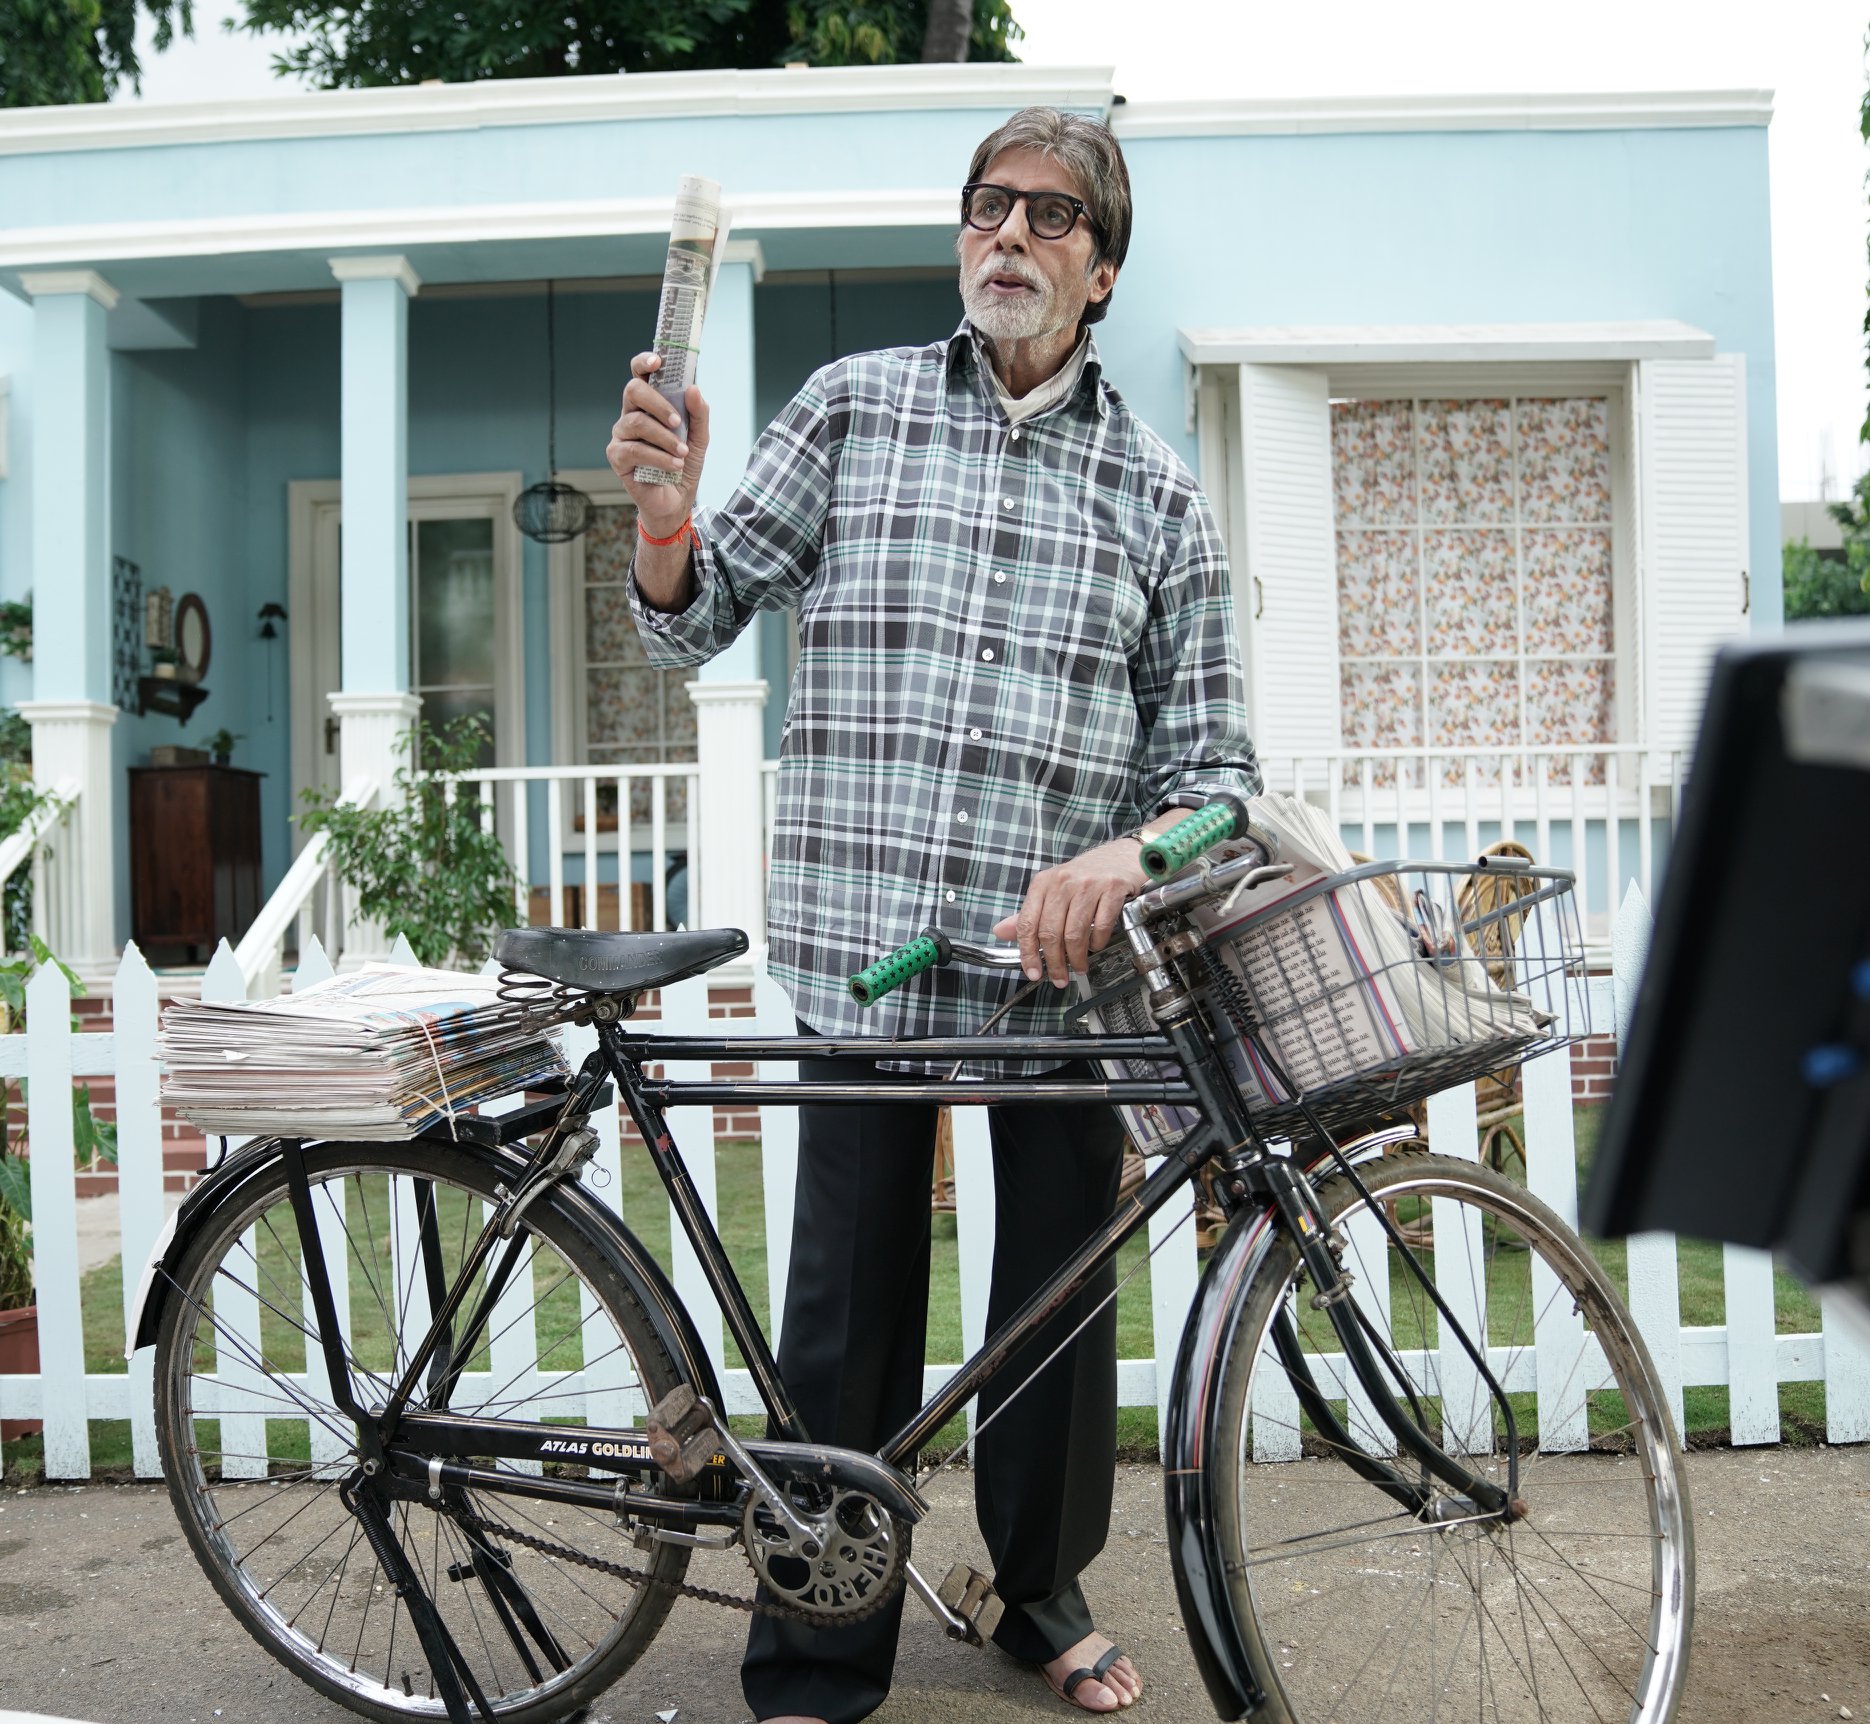 अमिताभ बच्चन की जीवनी | Amitabh Bachchan Biography in Hindi !!